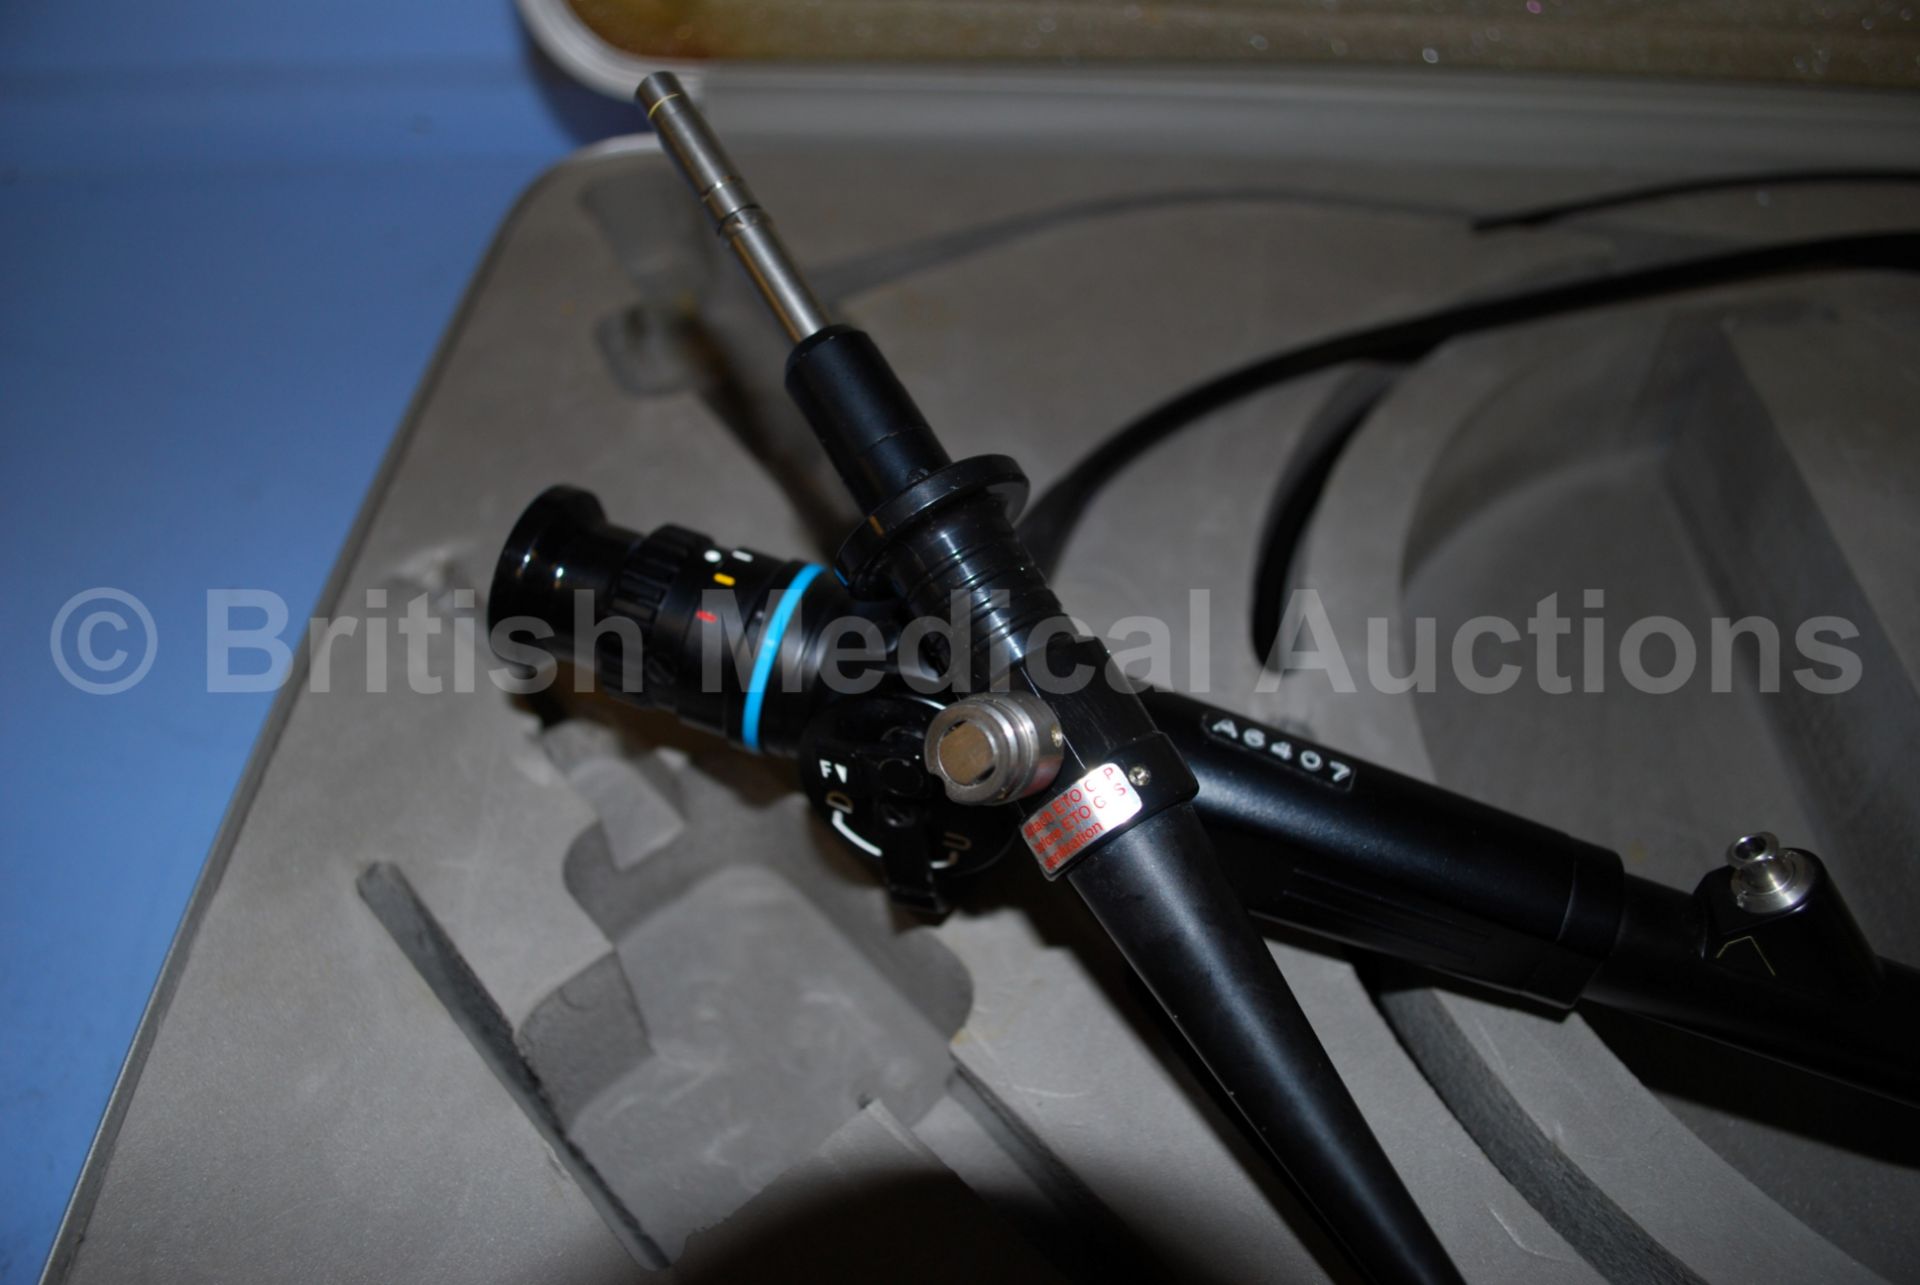 Olympus Flexible Endoscope in Case - Image 2 of 2